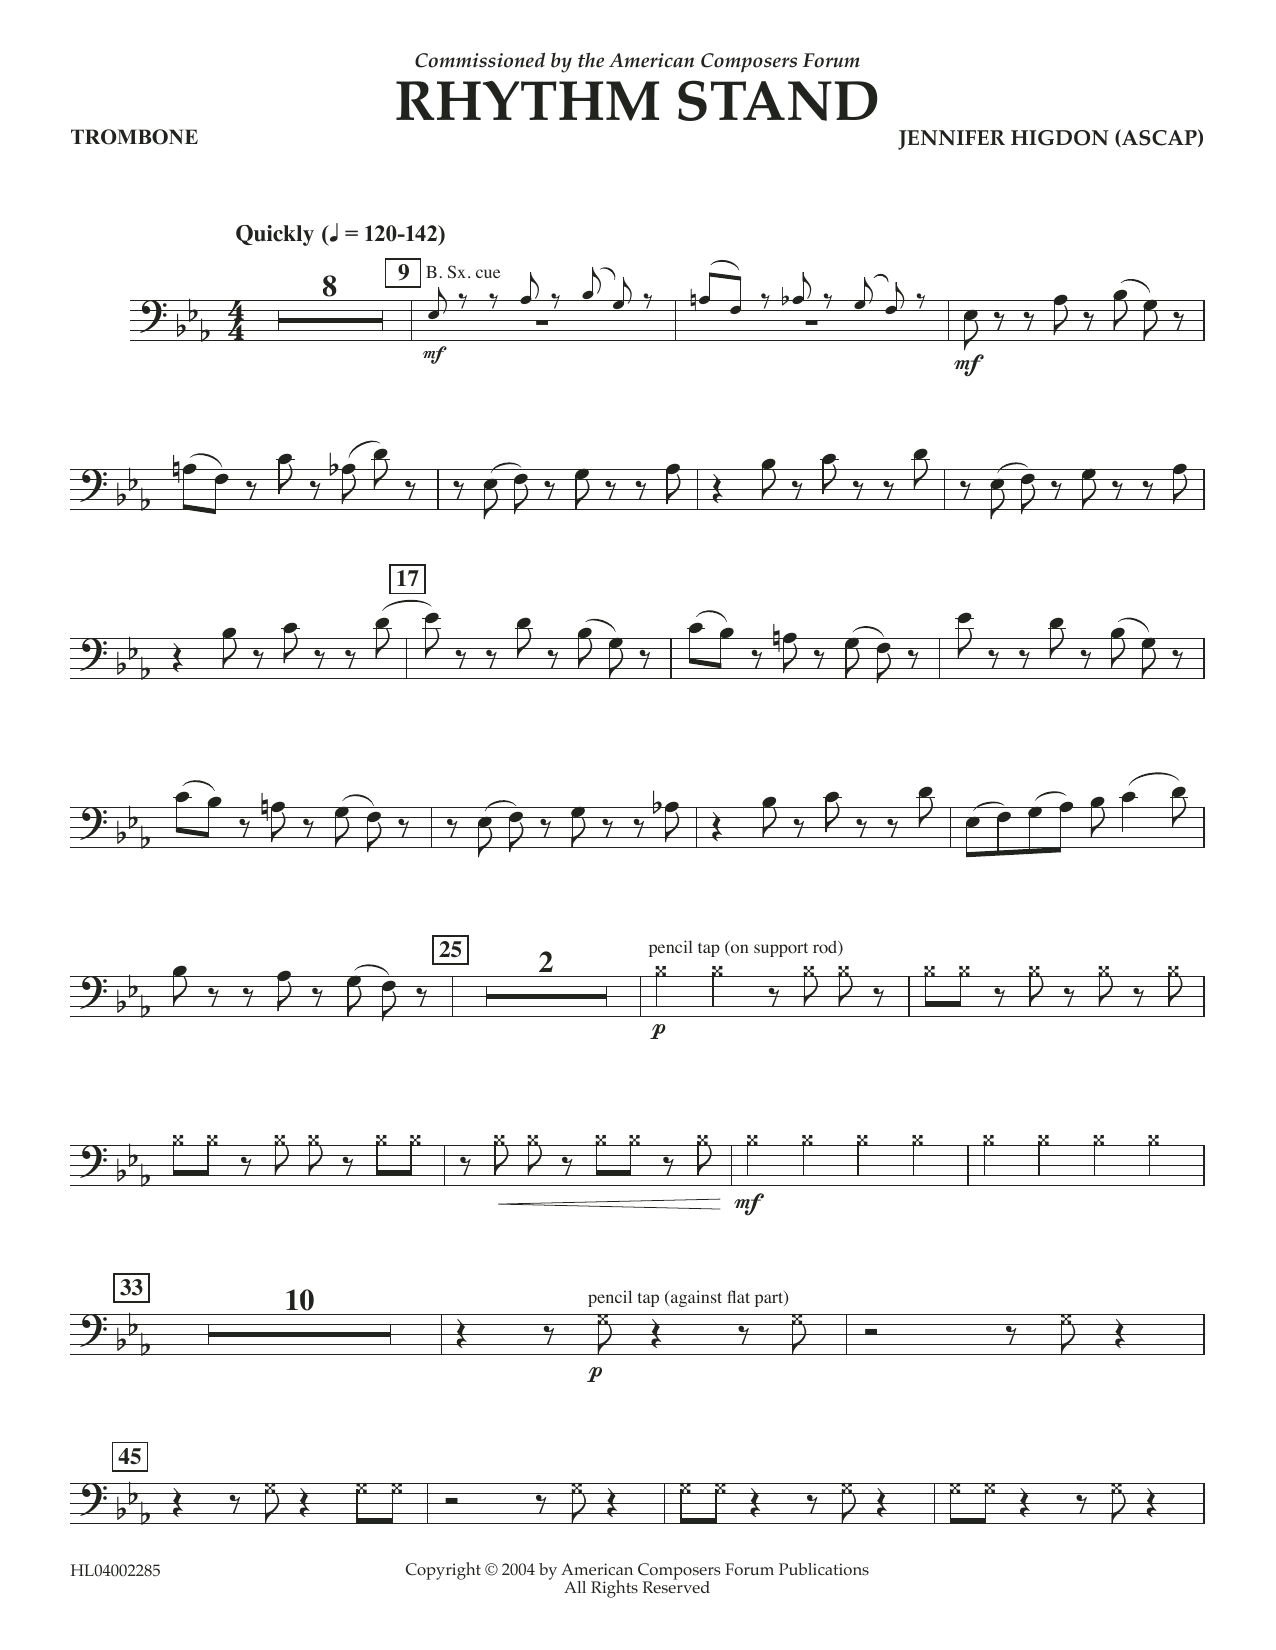 Jennifer Higdon Rhythm Stand - Trombone Sheet Music Notes & Chords for Concert Band - Download or Print PDF